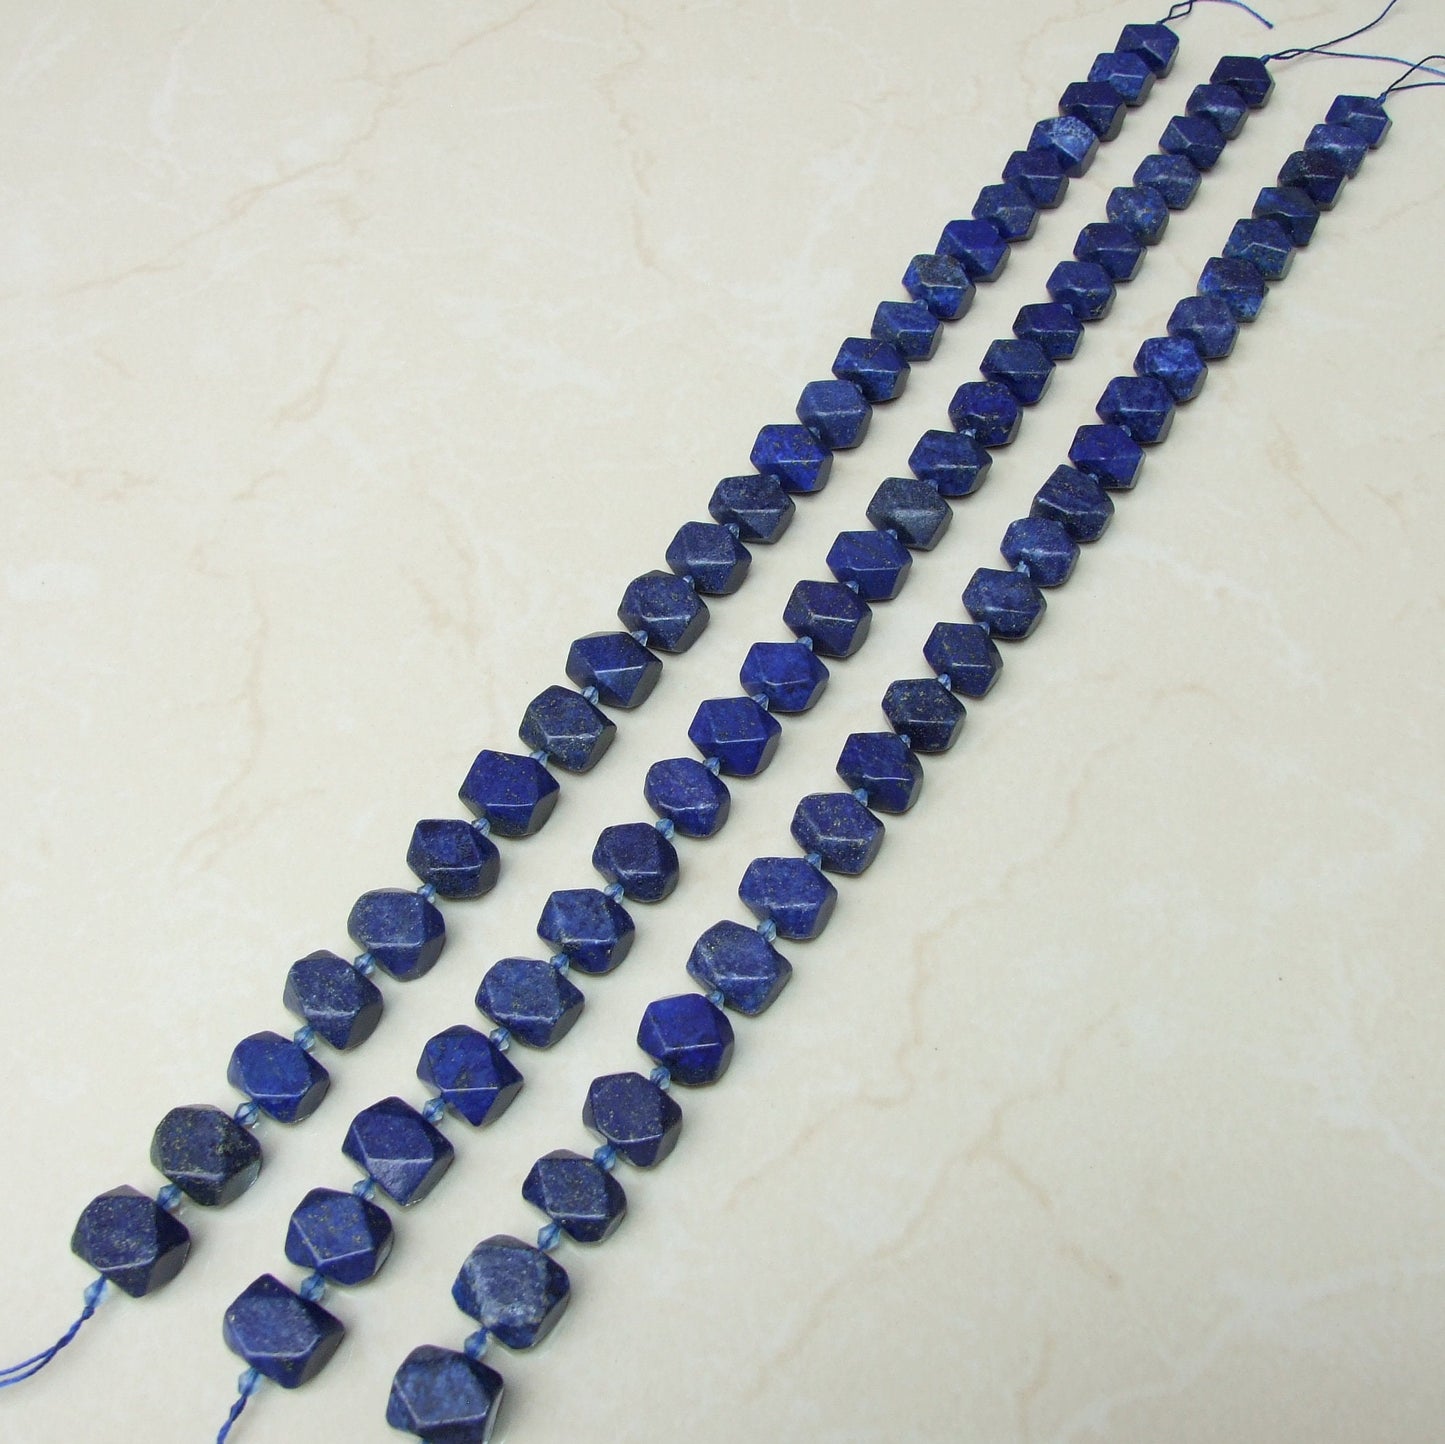 Lapis Lazuli Faceted Nugget, Lapis Pendant, Lapis Nugget, Gemstone Beads, Lapis Bead, Loose Jewelry Stones, Half Strand - 18mm to 20mm